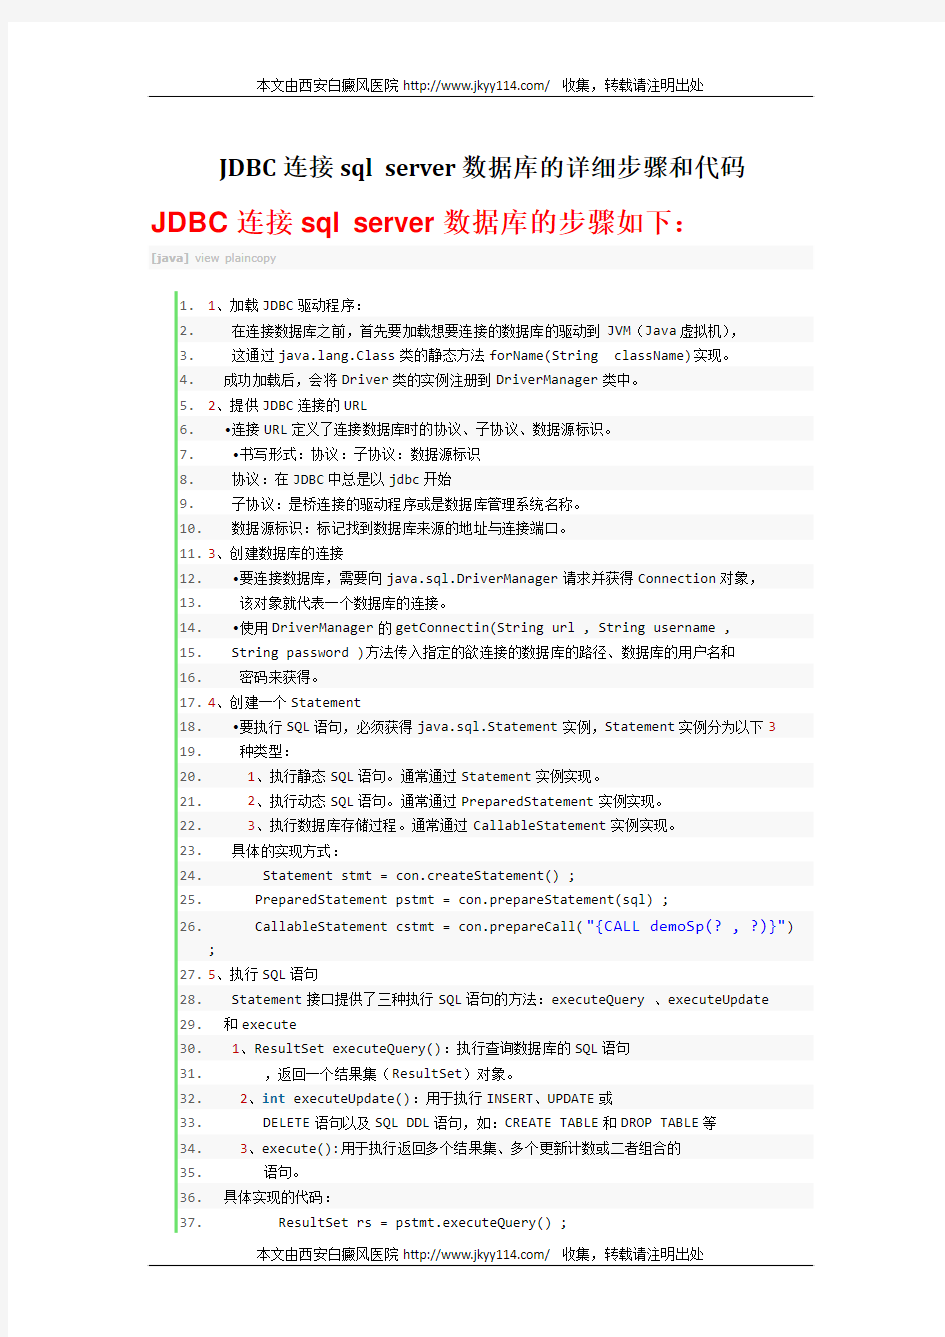 JDBC连接sql server数据库的详细步骤和代码